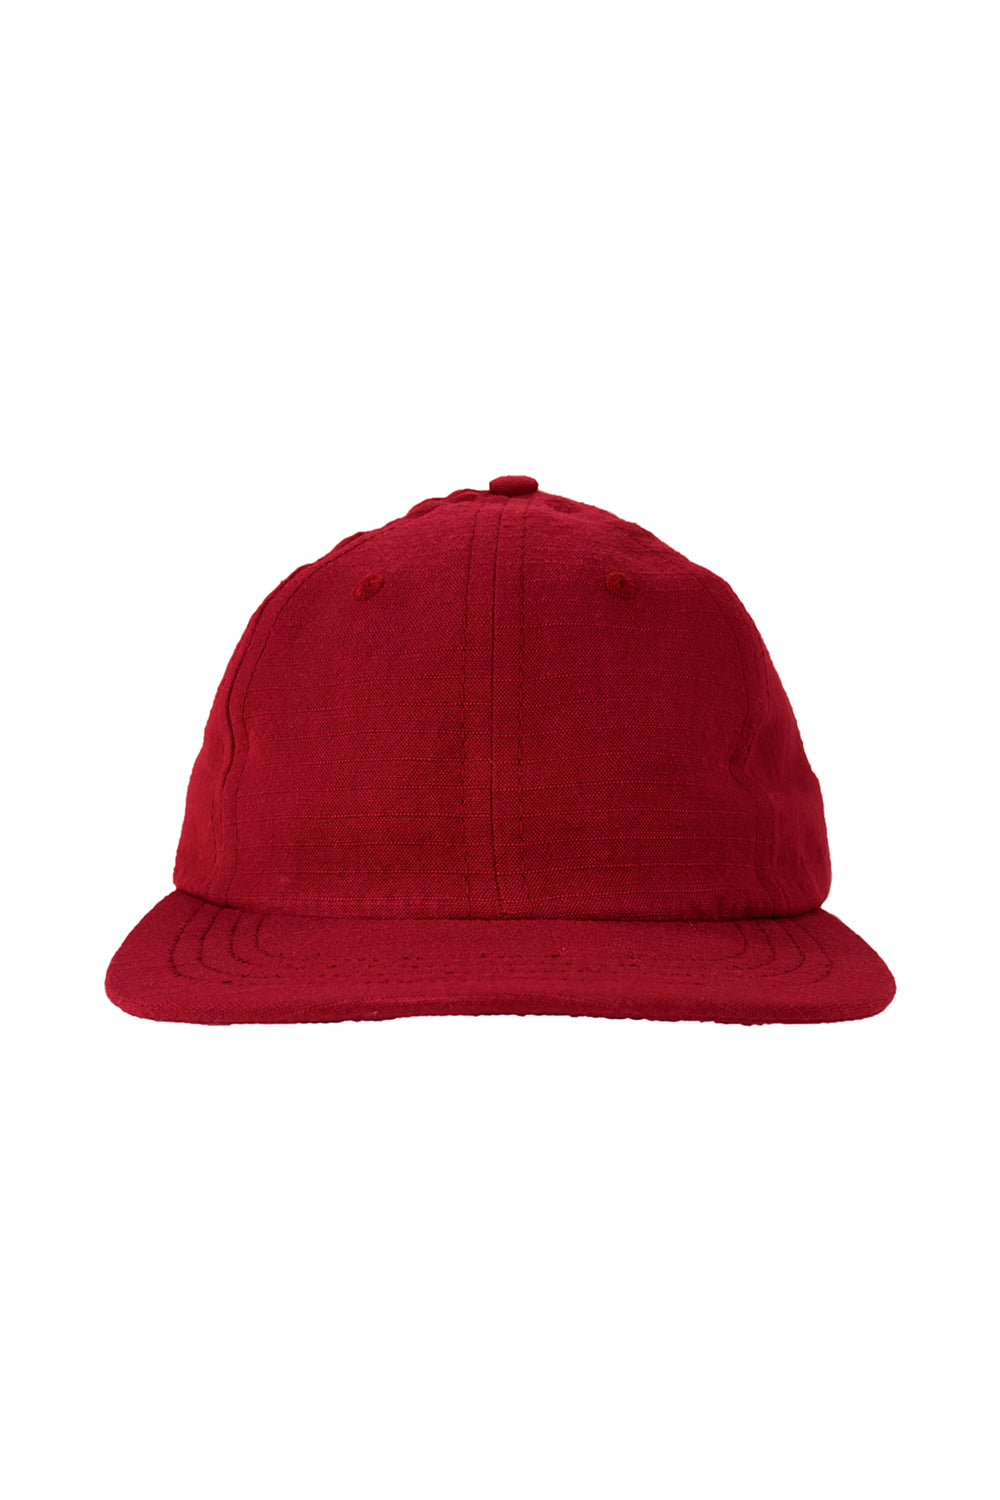 Chenga Ripstop Cap | Jungmaven Hemp Clothing & Accessories / Color: Cherry Red